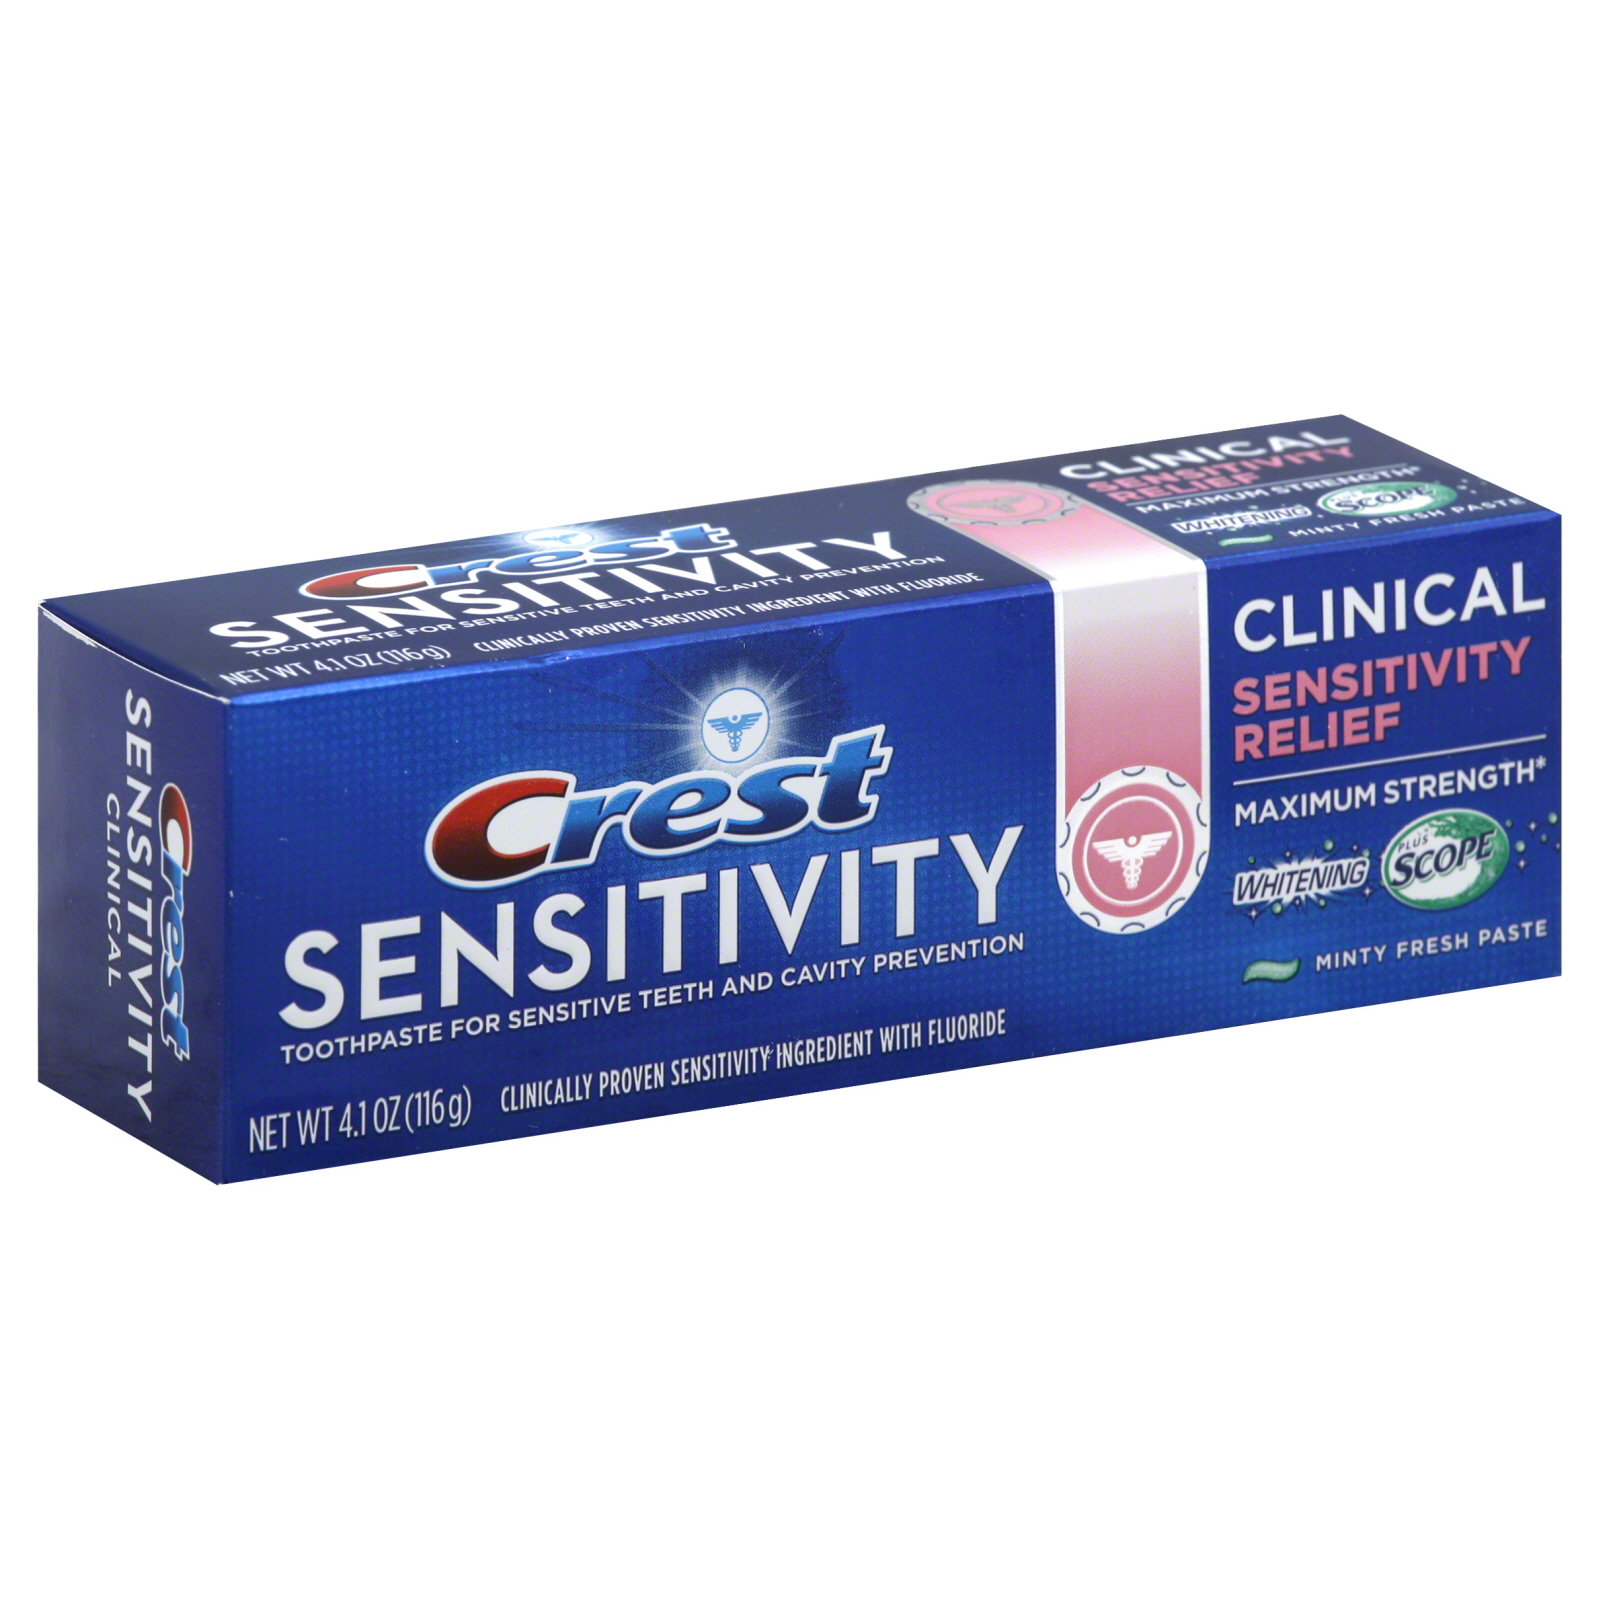 Crest Sensitivity Whitening Plus Scope Toothpaste, Clinical, Sensitivity Relief, Maximum Strength, Minty Fresh Paste, 4.1 oz (116 g)